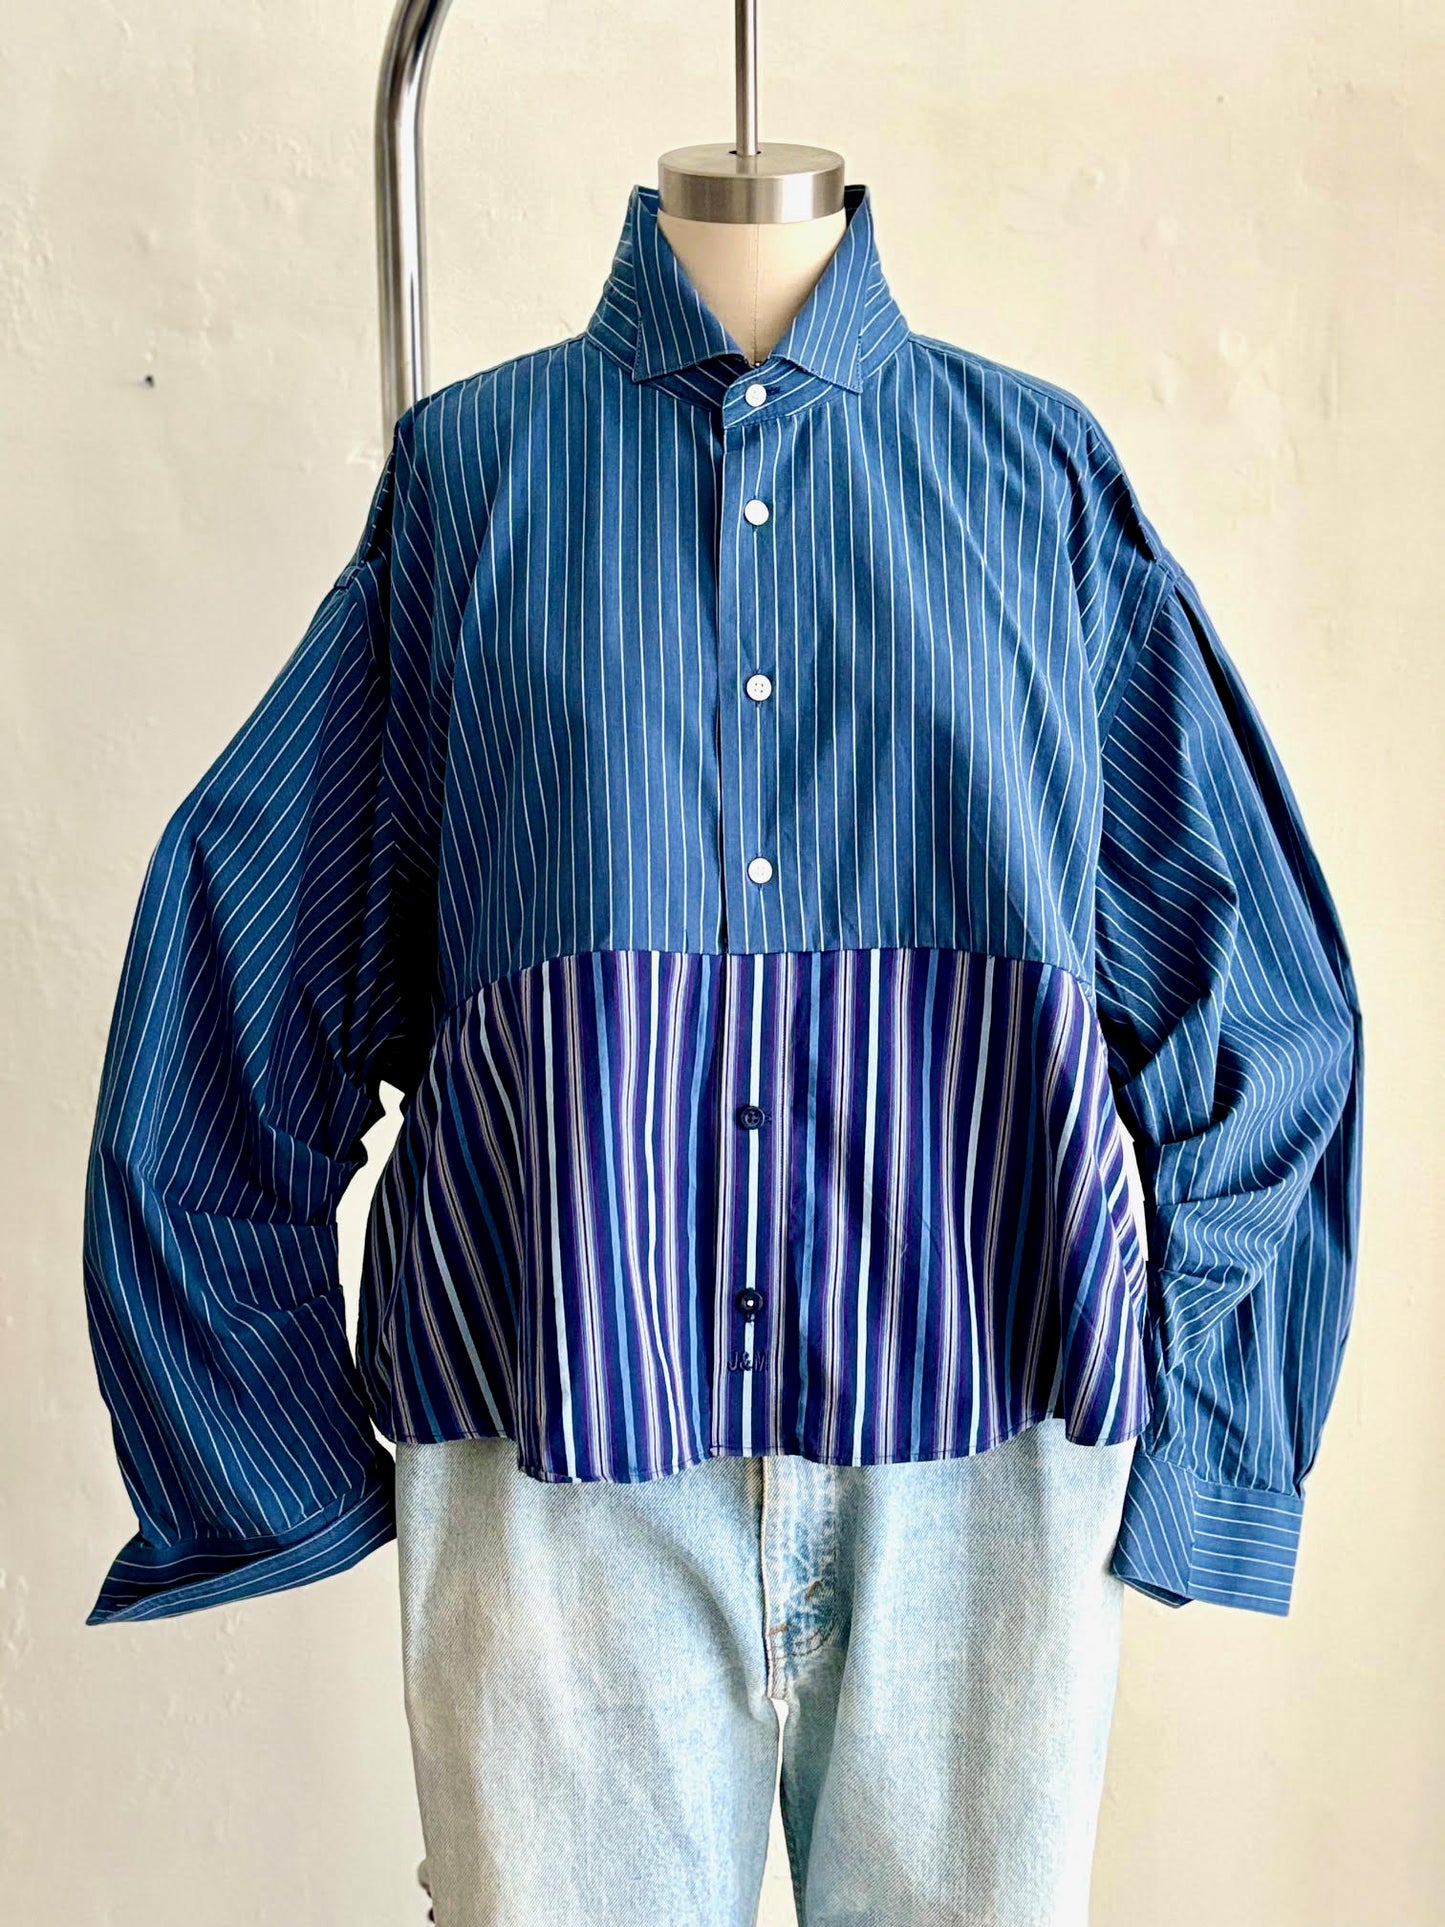 Rich Blue Stripes Half-and-Half Shirt